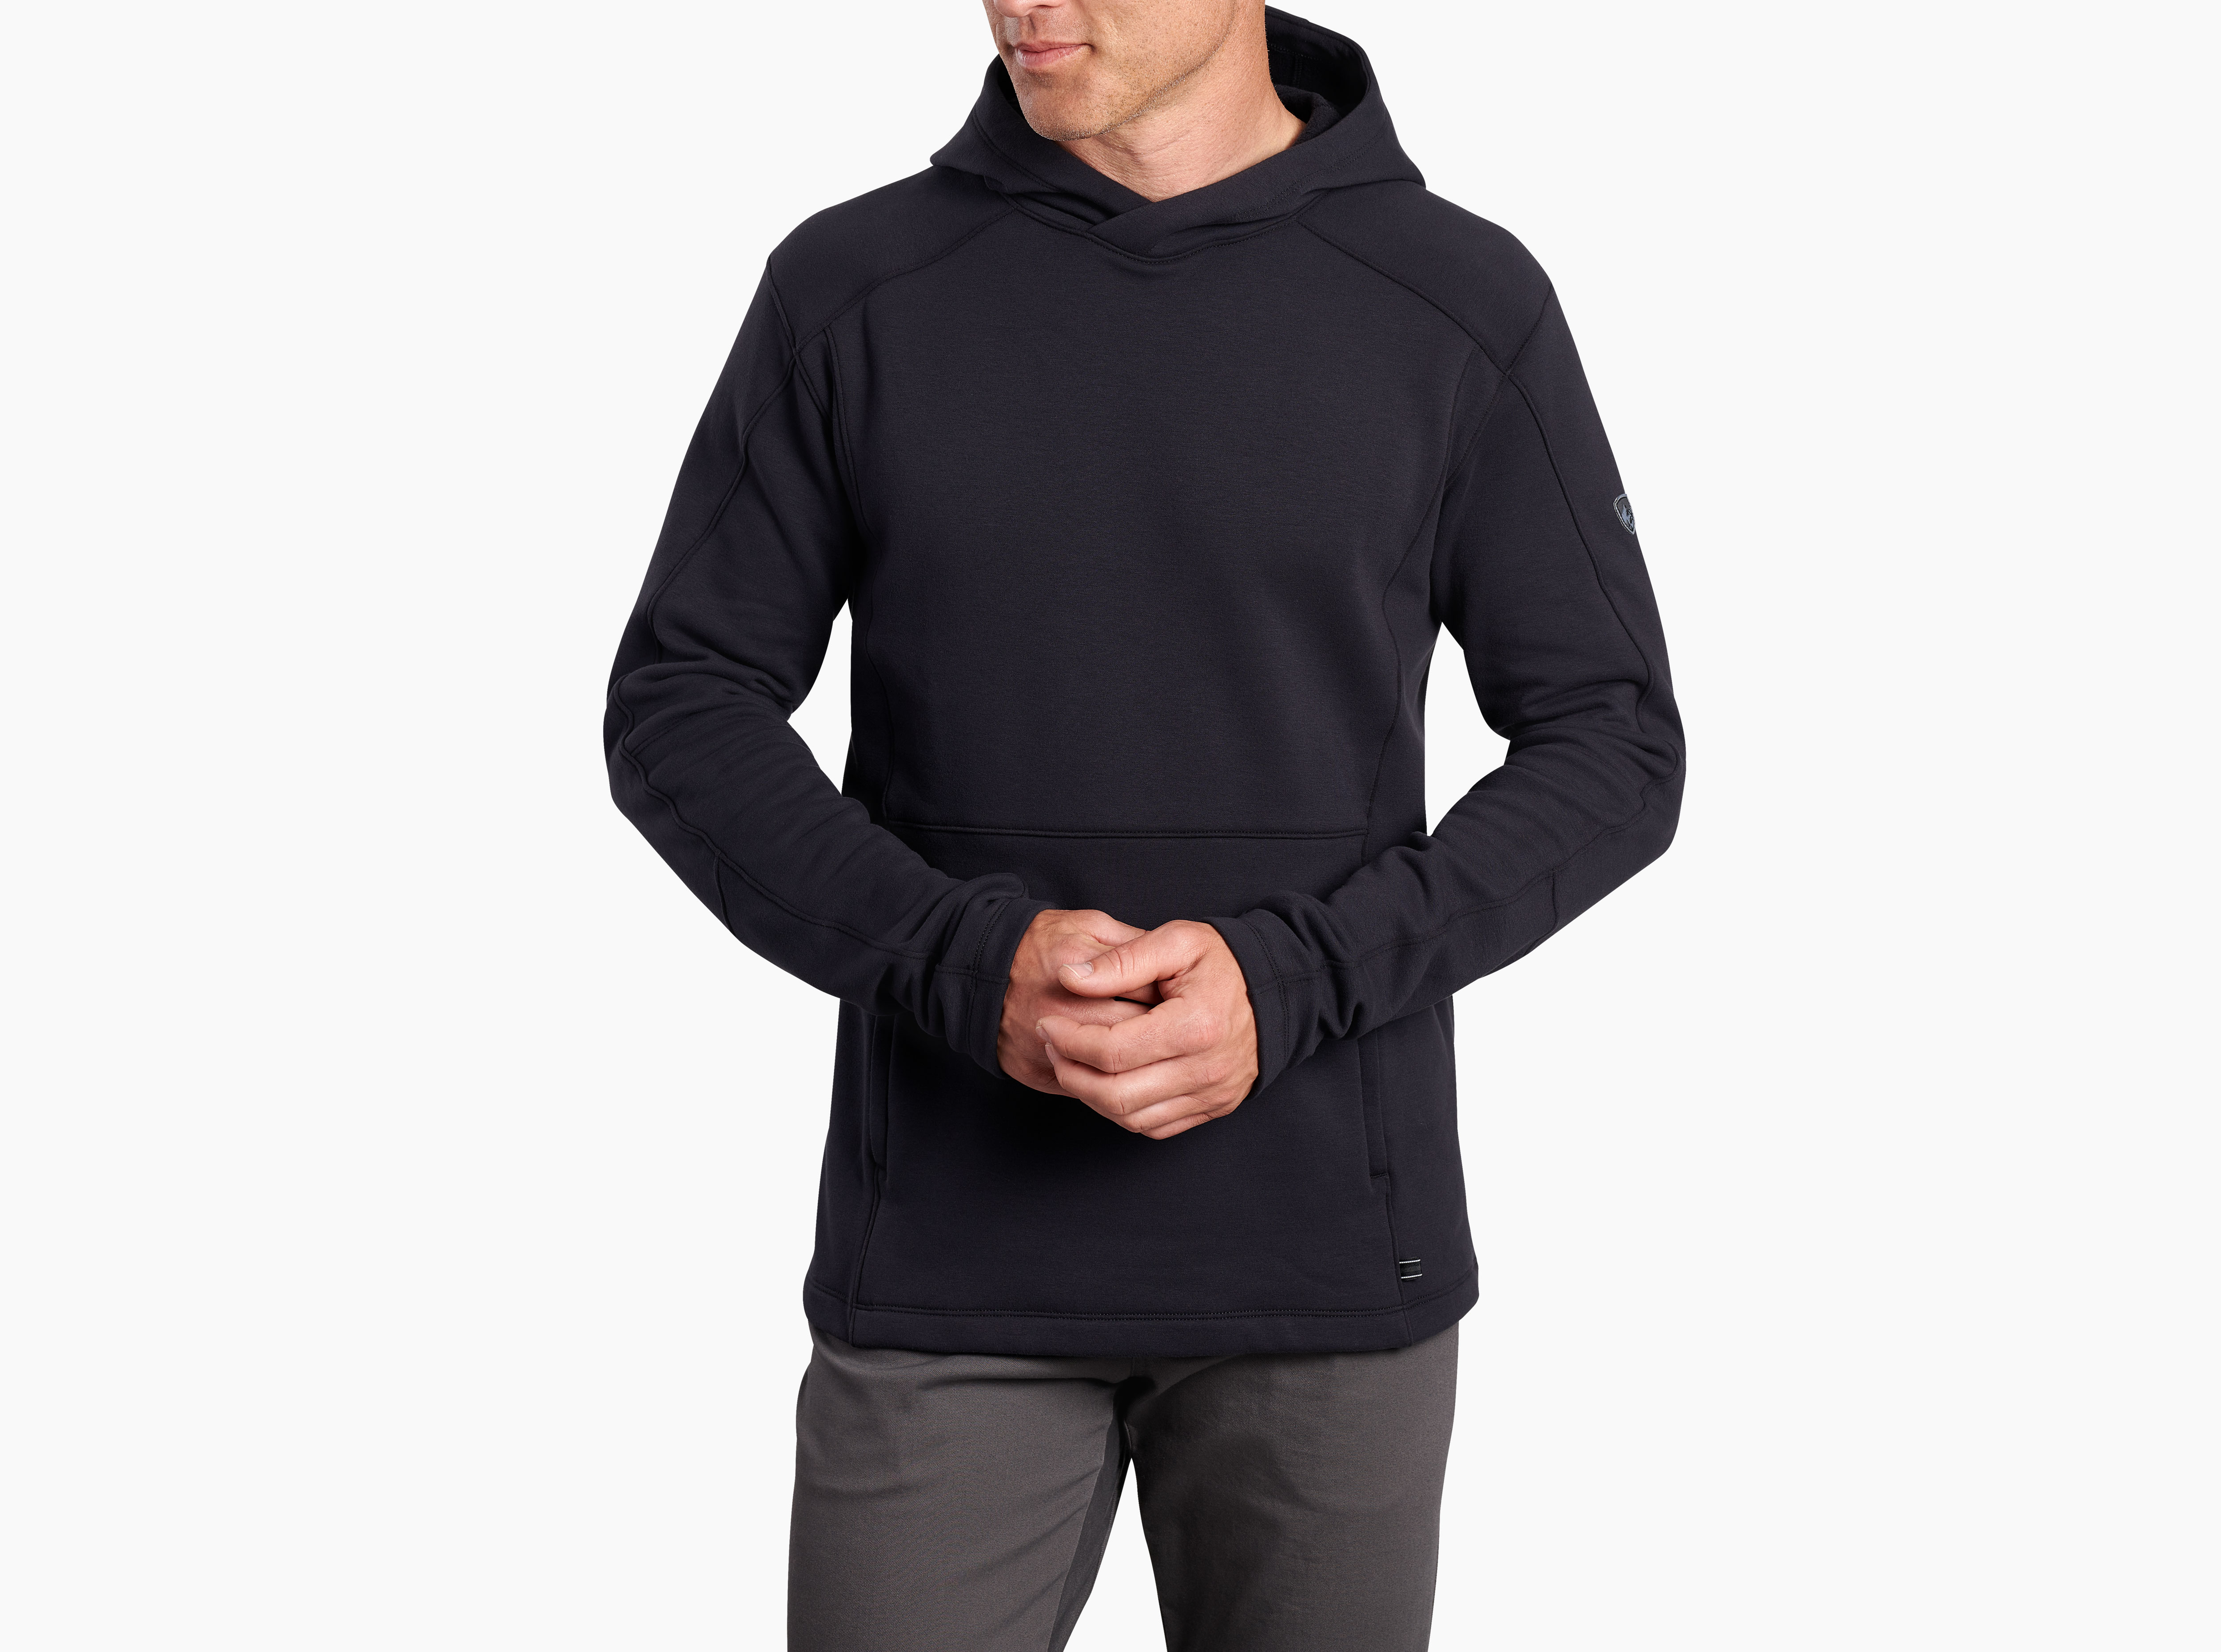 Kuhl Evader Men's Sweater, XC / Apparel